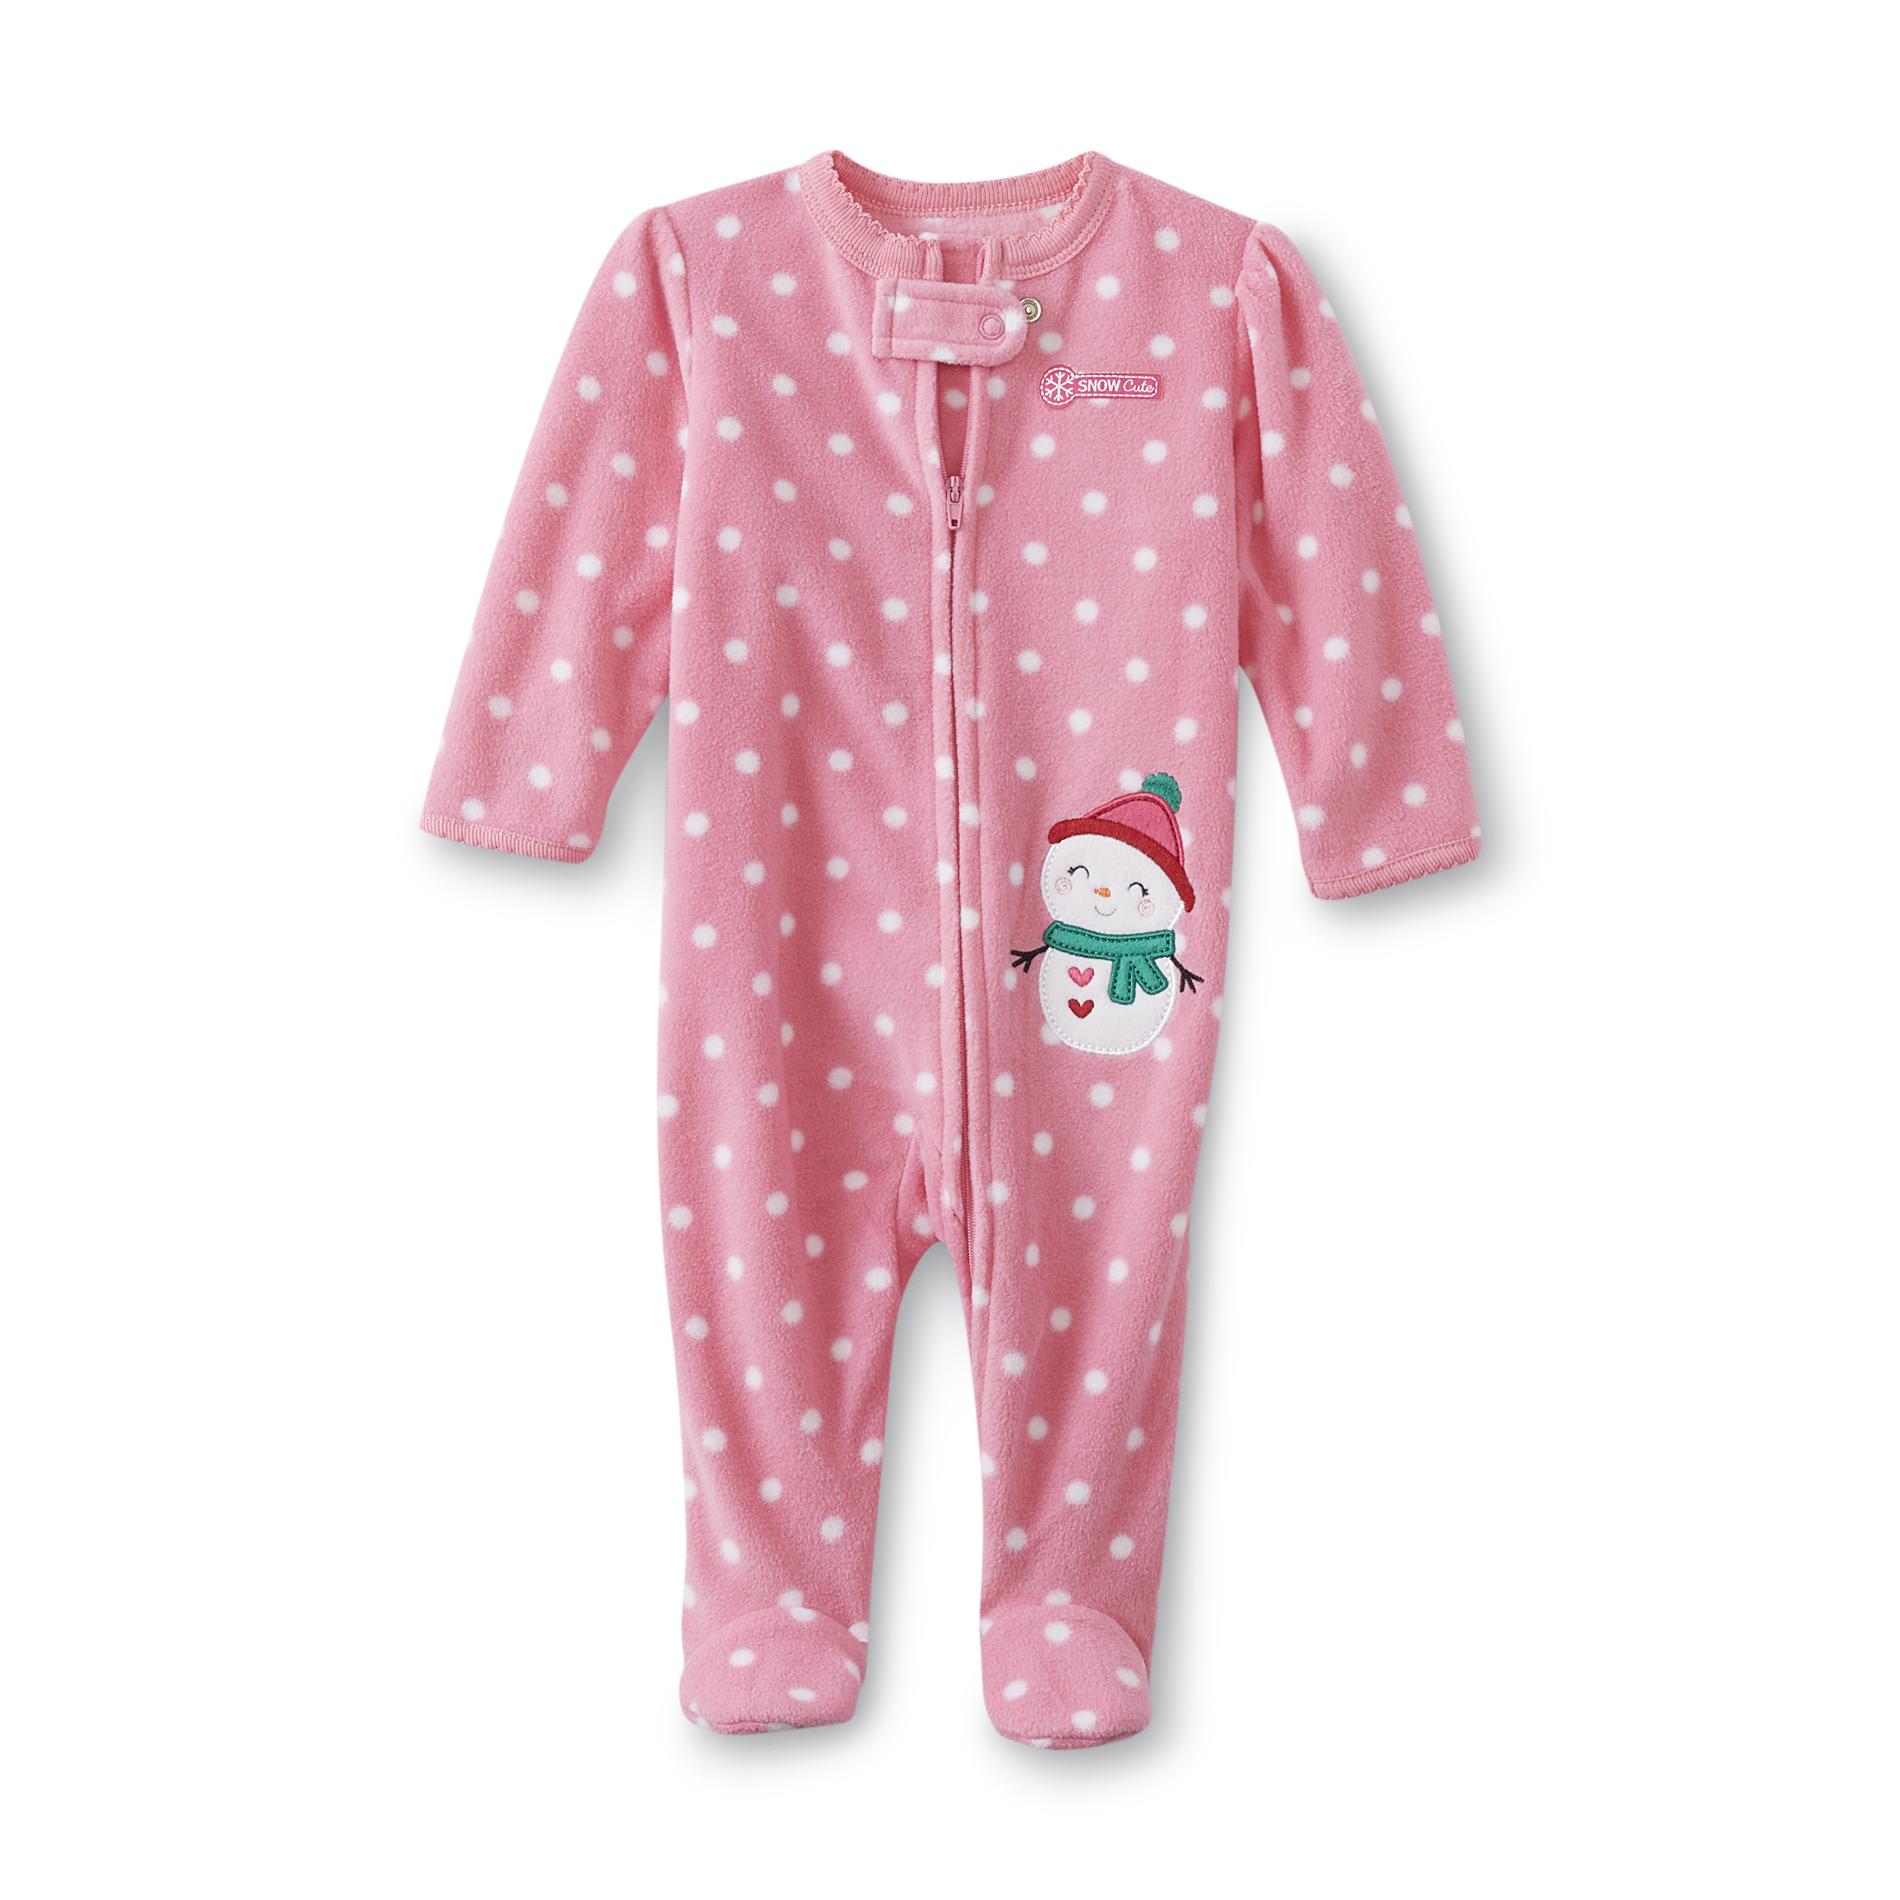 Holiday Editions Newborn & Infant Girl's Christmas Footed Sleeper Pajamas - Snowman